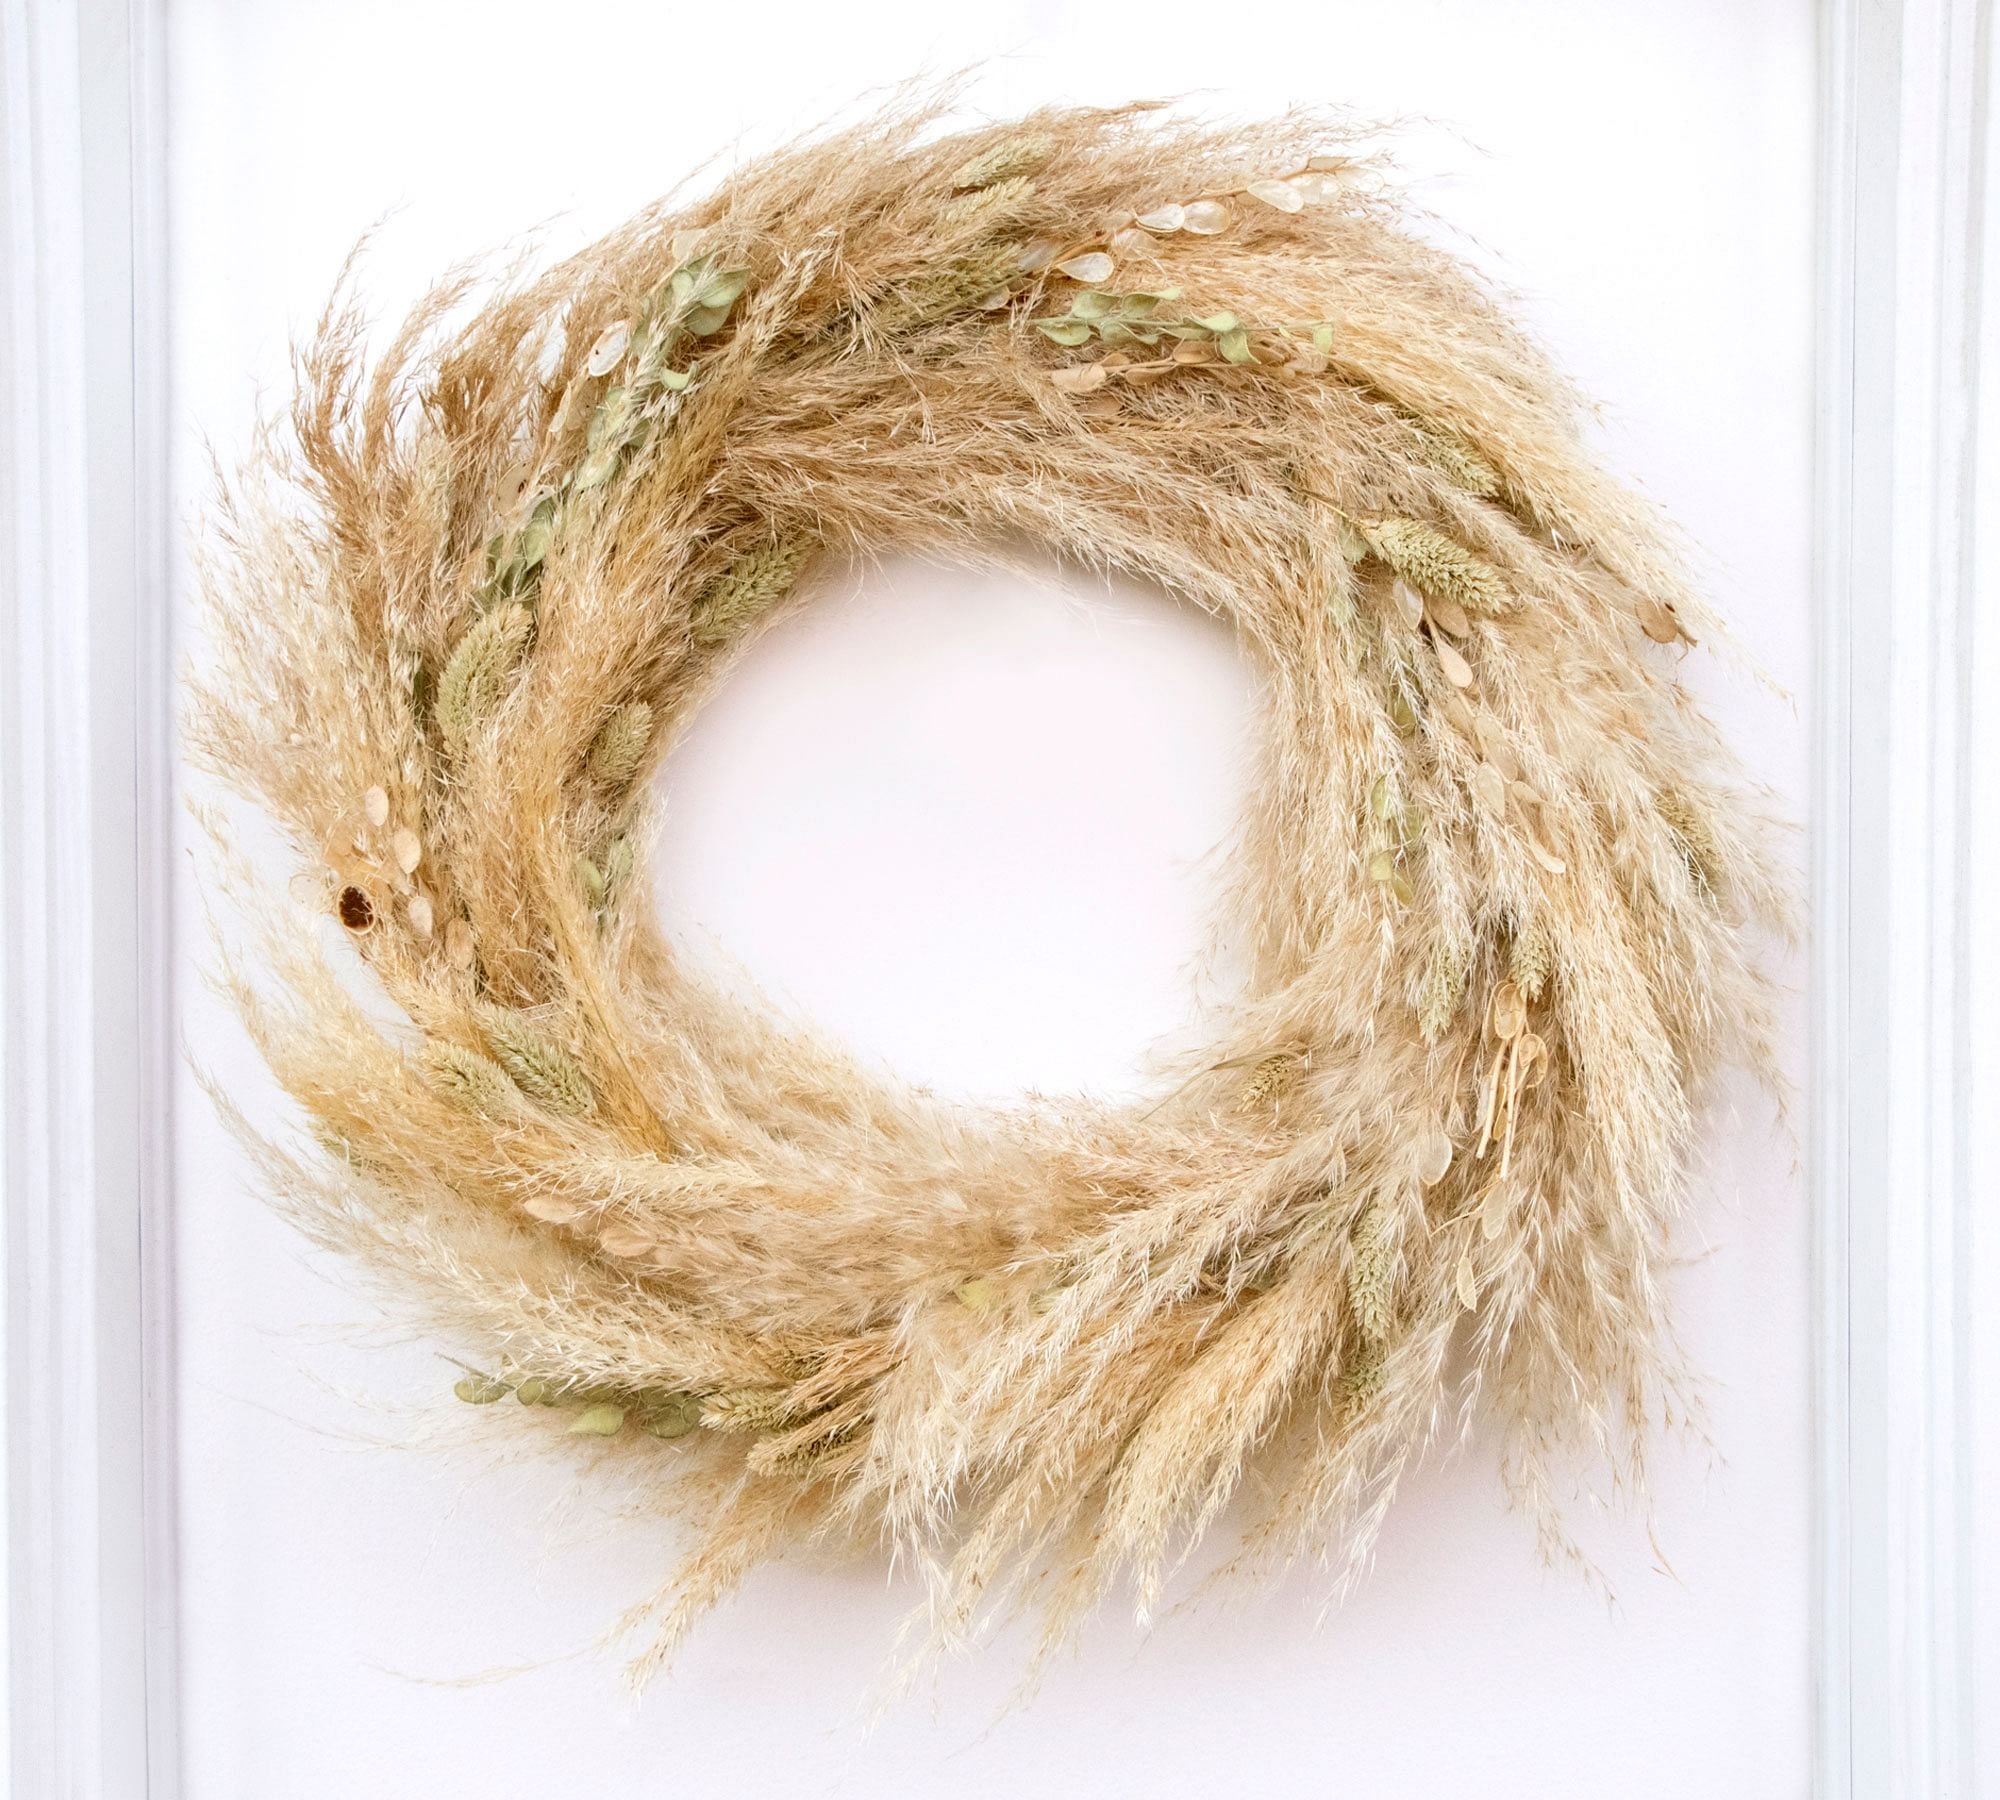 Pampas Grass Wreath - 18"W